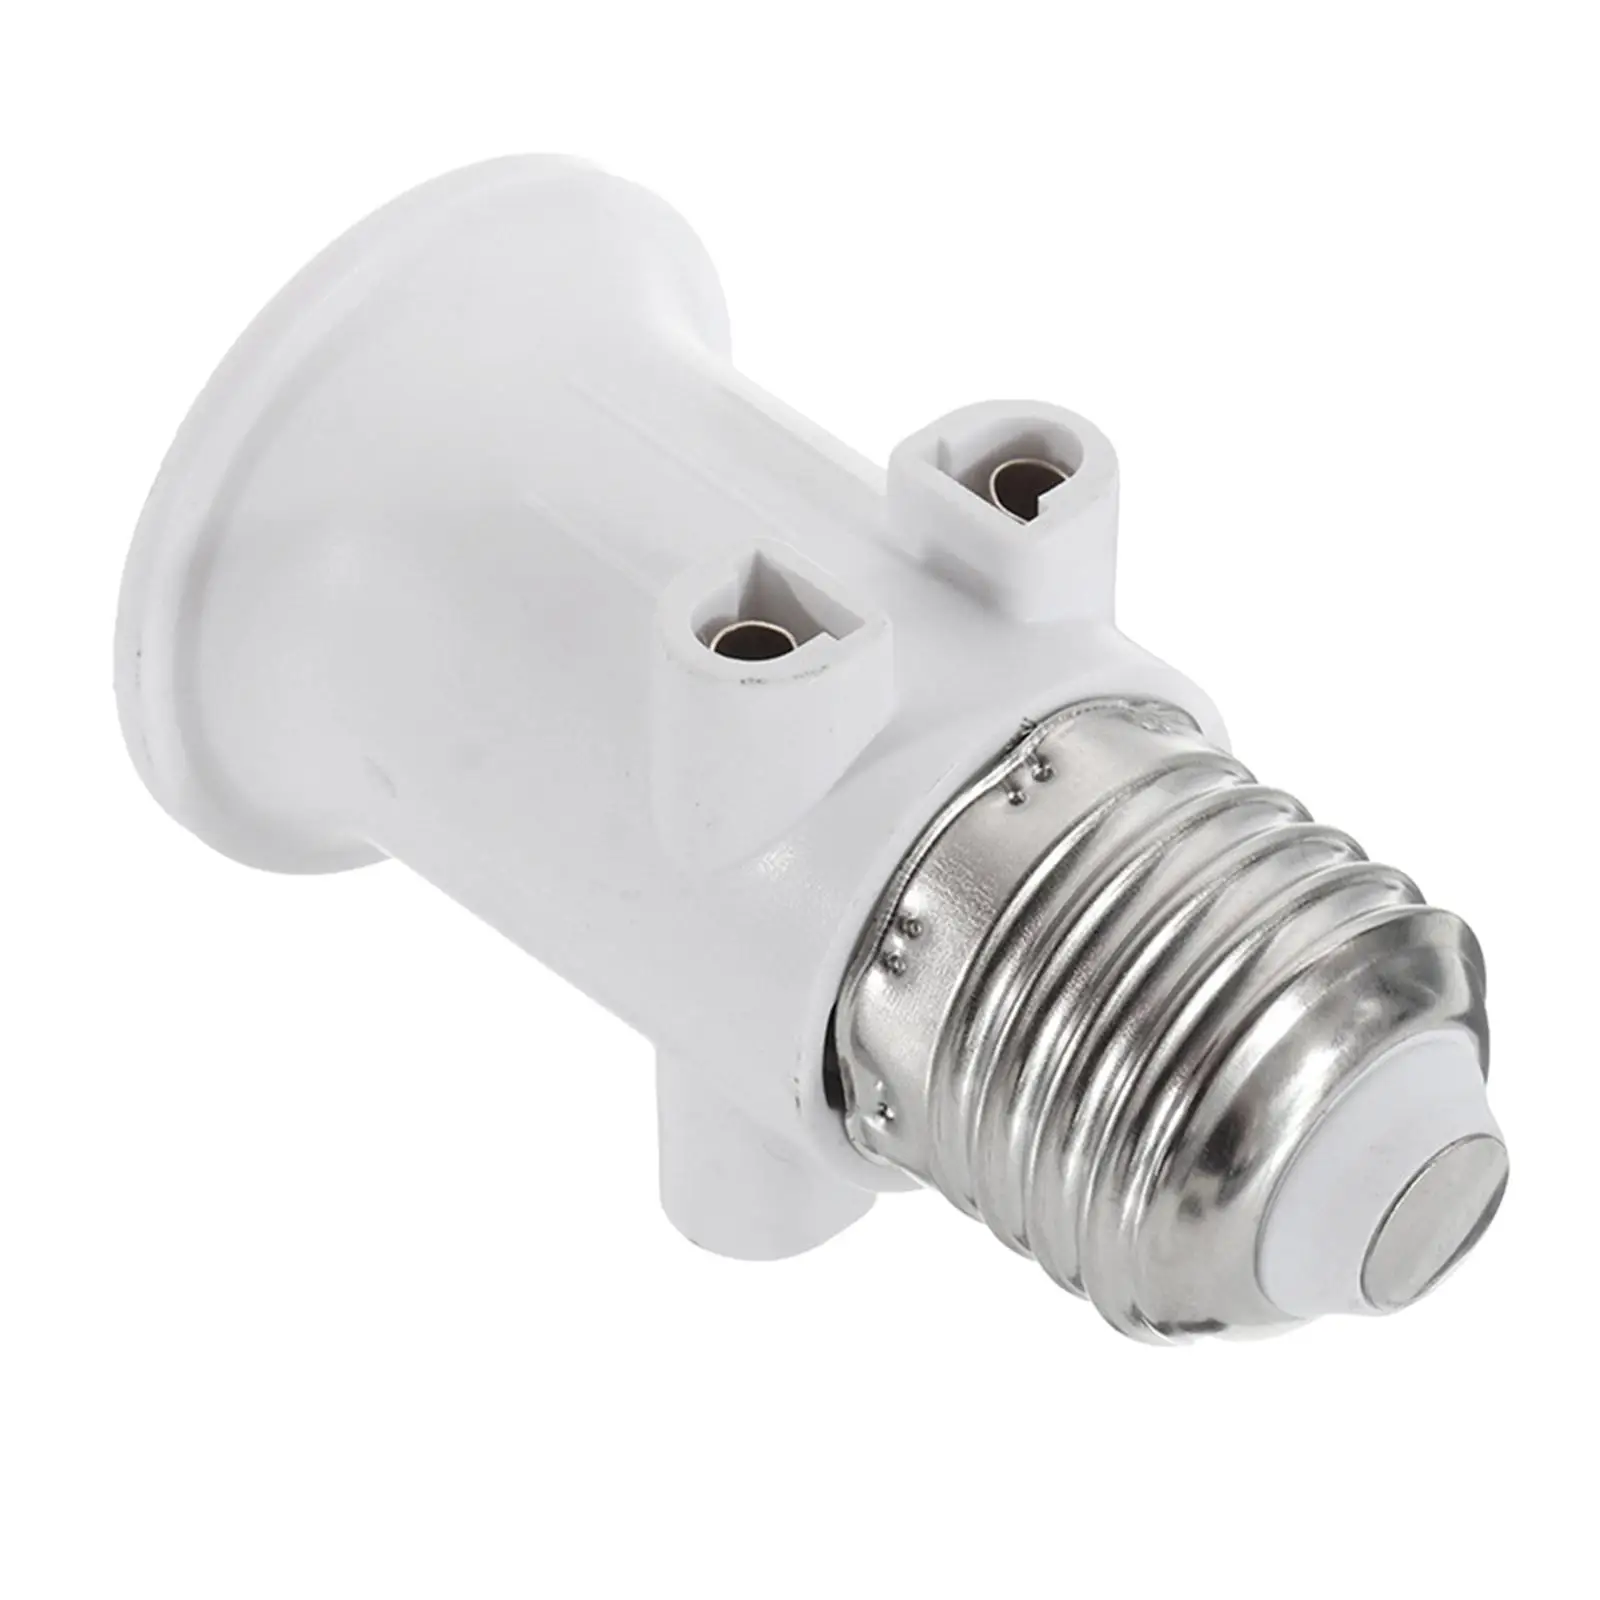 1pc E27 Socket Light Bulb Lamp Base Connector Holder Adapter Plug Converter Fireproof EU Plug Connector Bulb Adapter